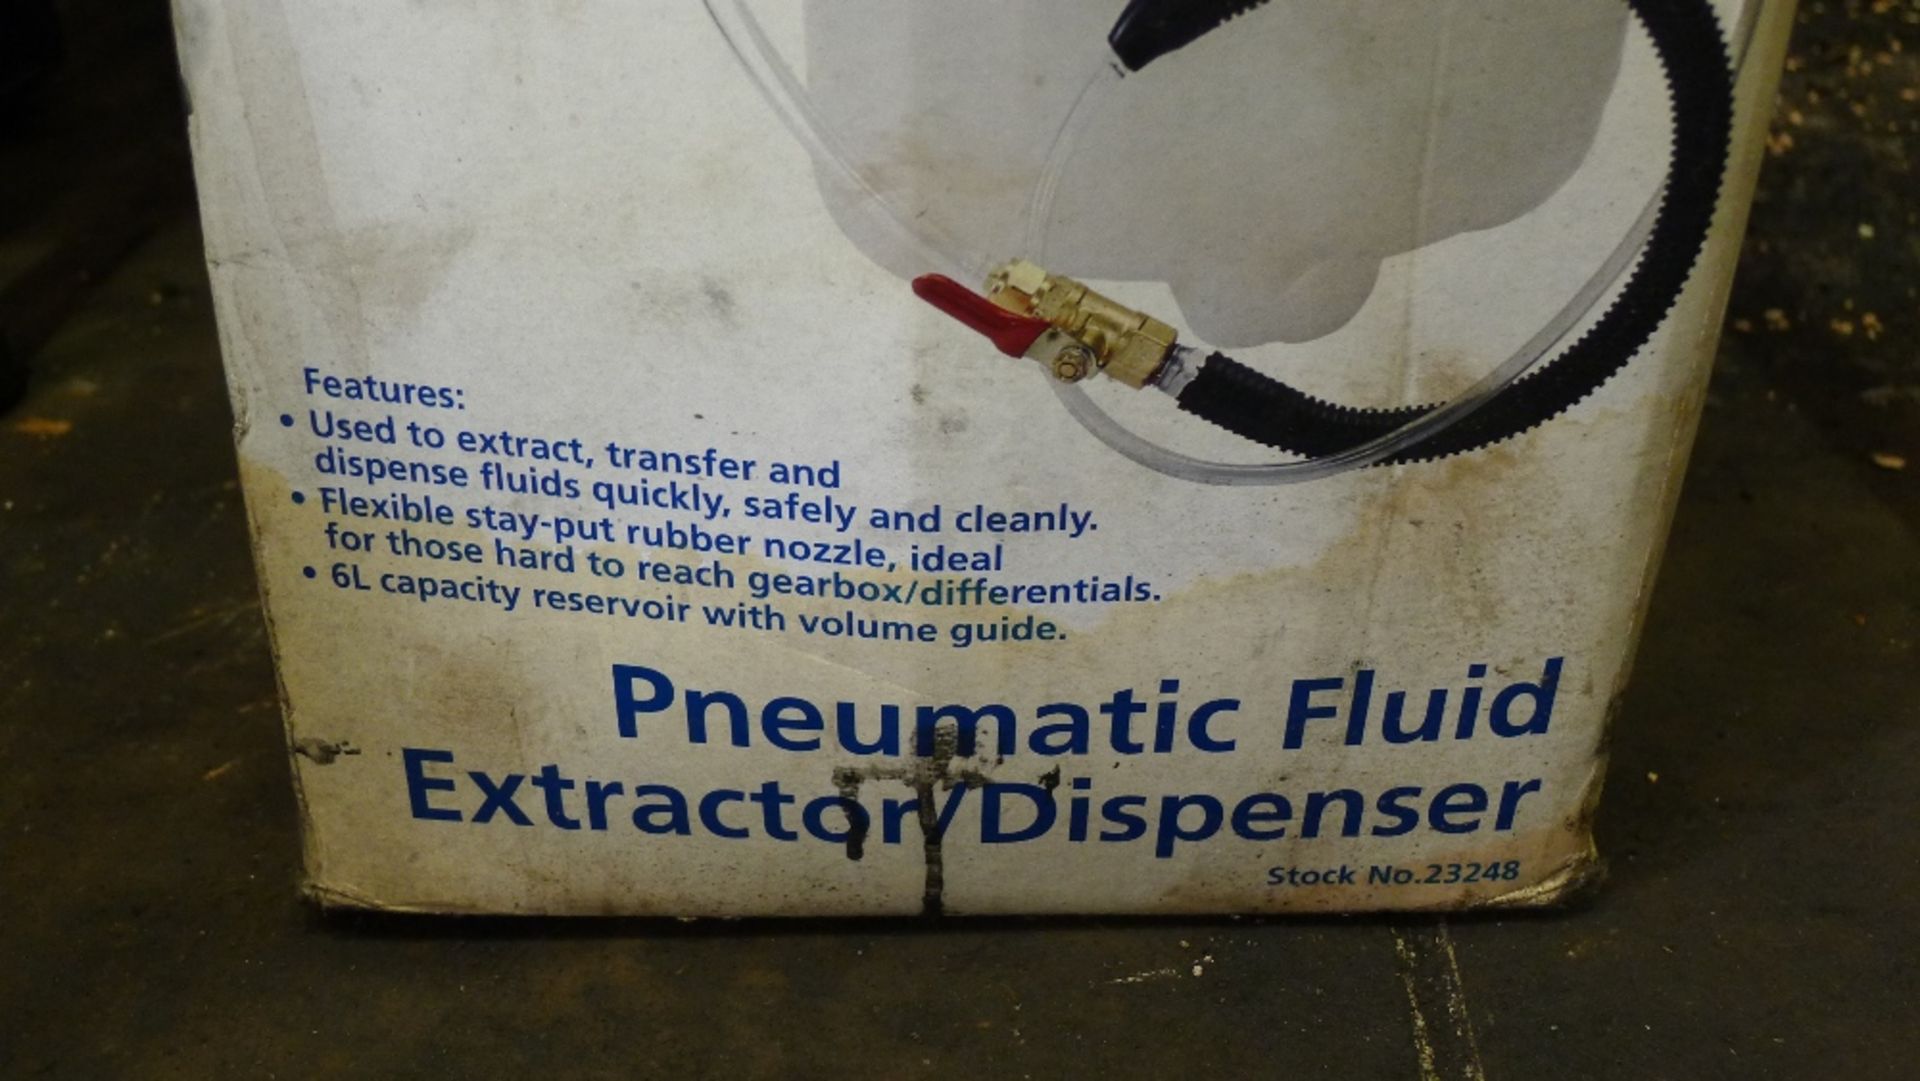 1 Draper pneumatic fluid extractor / dispenser type 23248 - Image 2 of 3